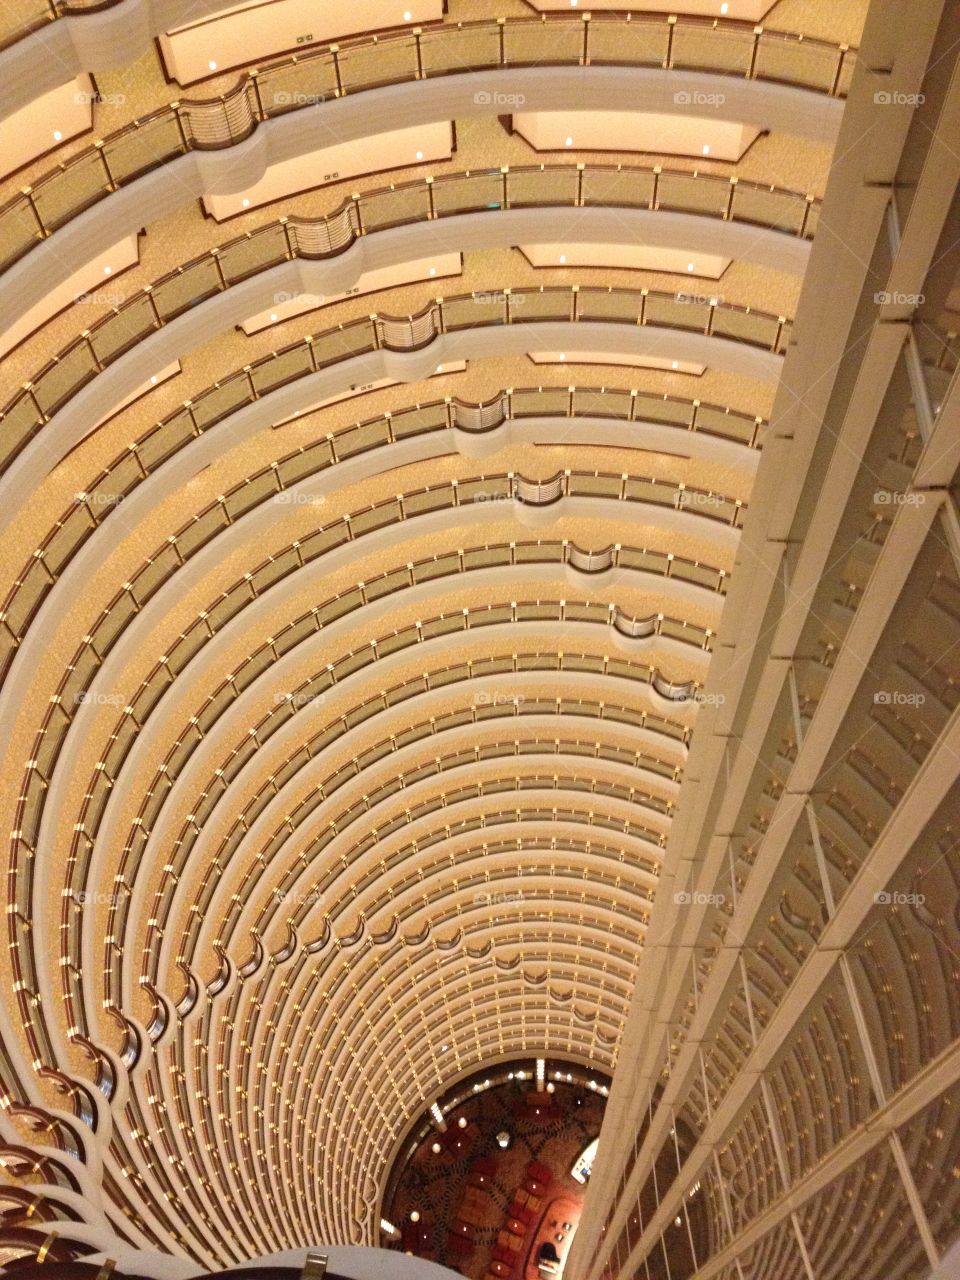 Grand Hyatt Shanghai, iconic luxury 5-star hotel inside the Jin Mao Tower, Lujiazui, Pudong